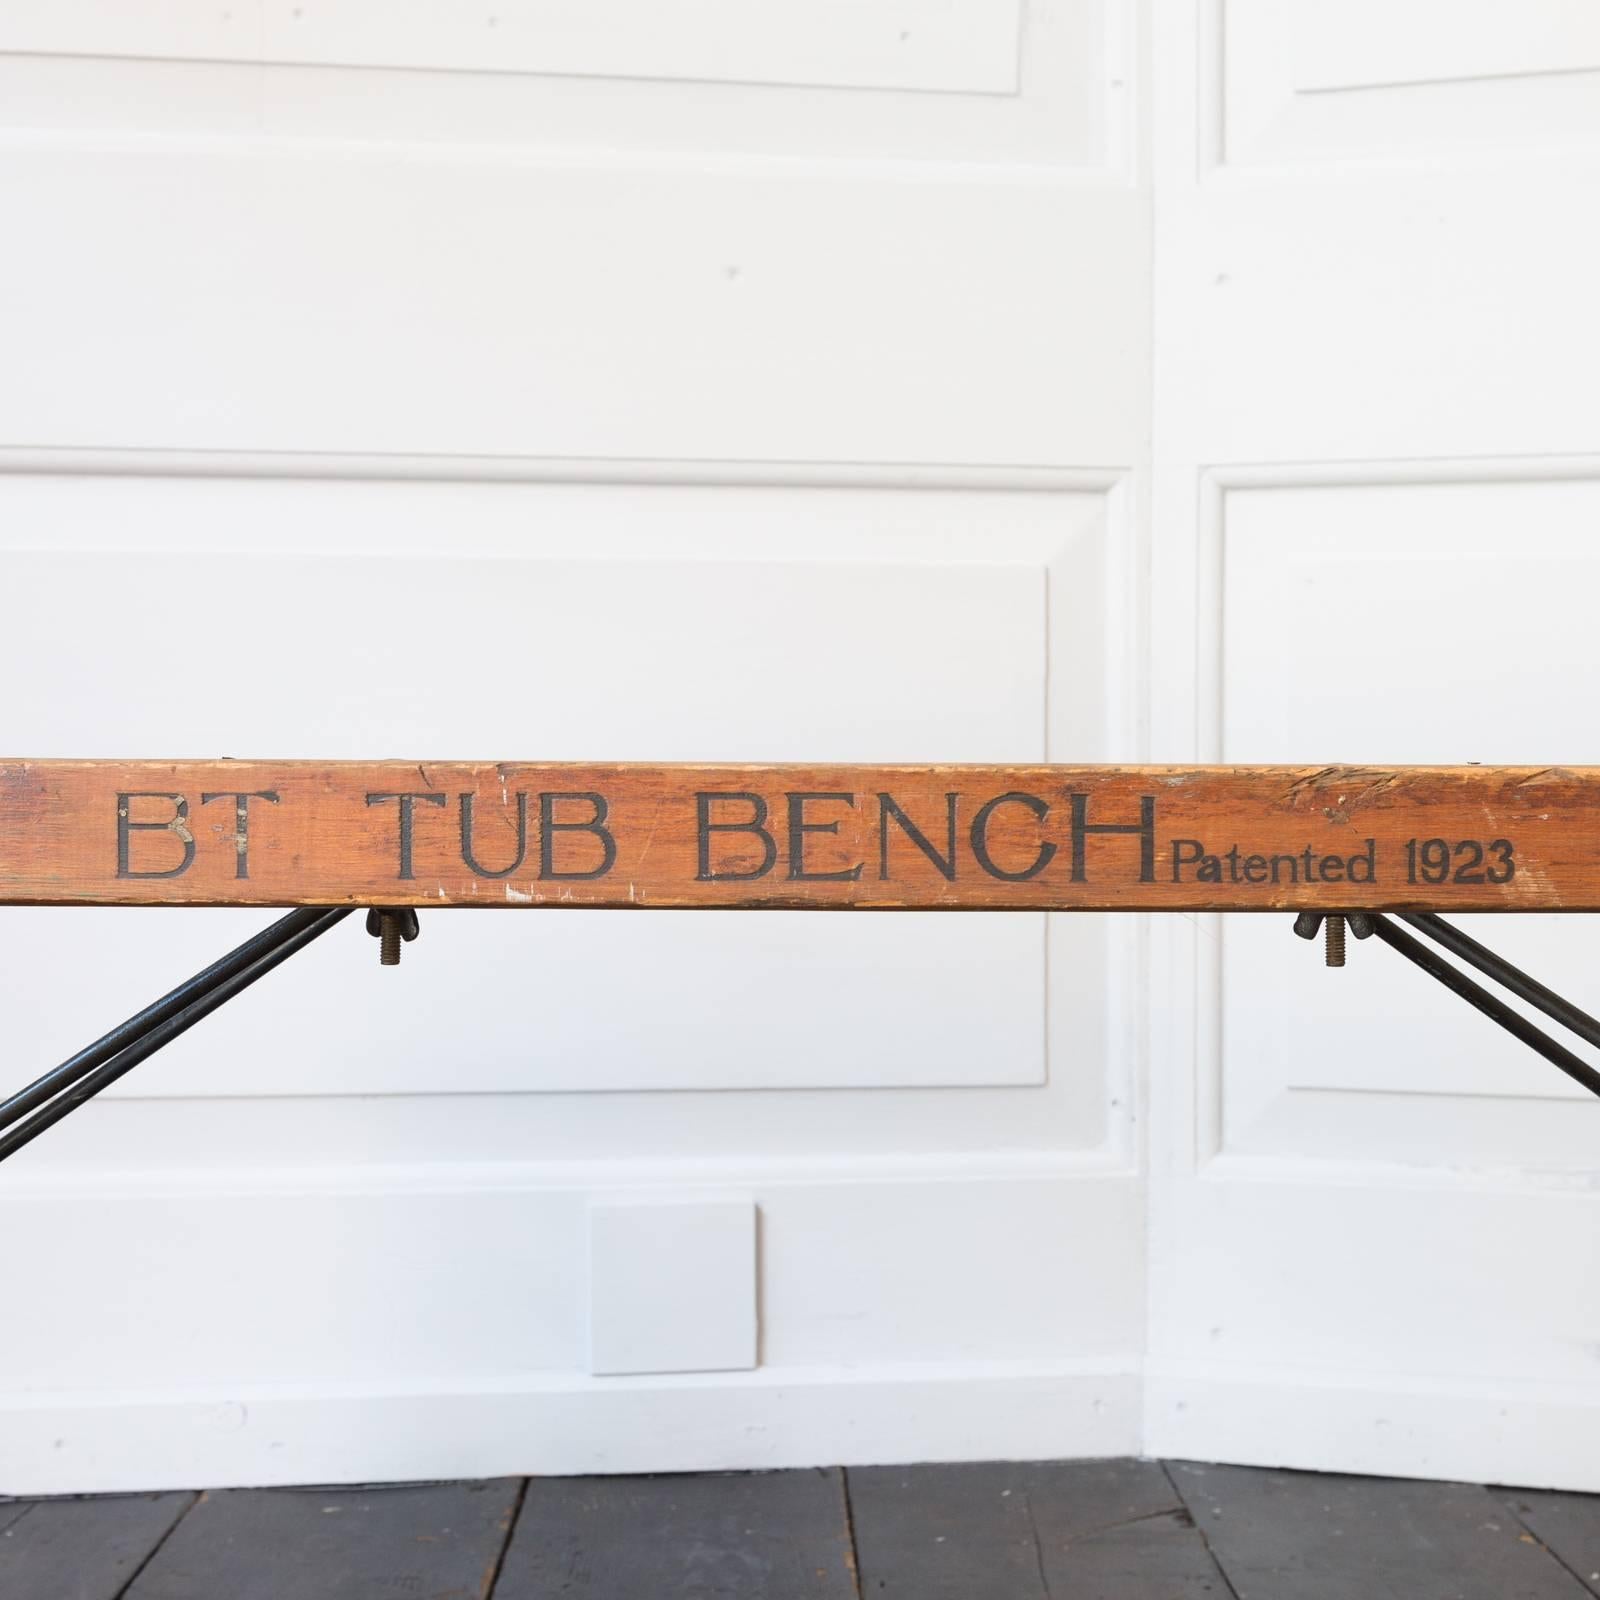 bt tub bench patented 1923